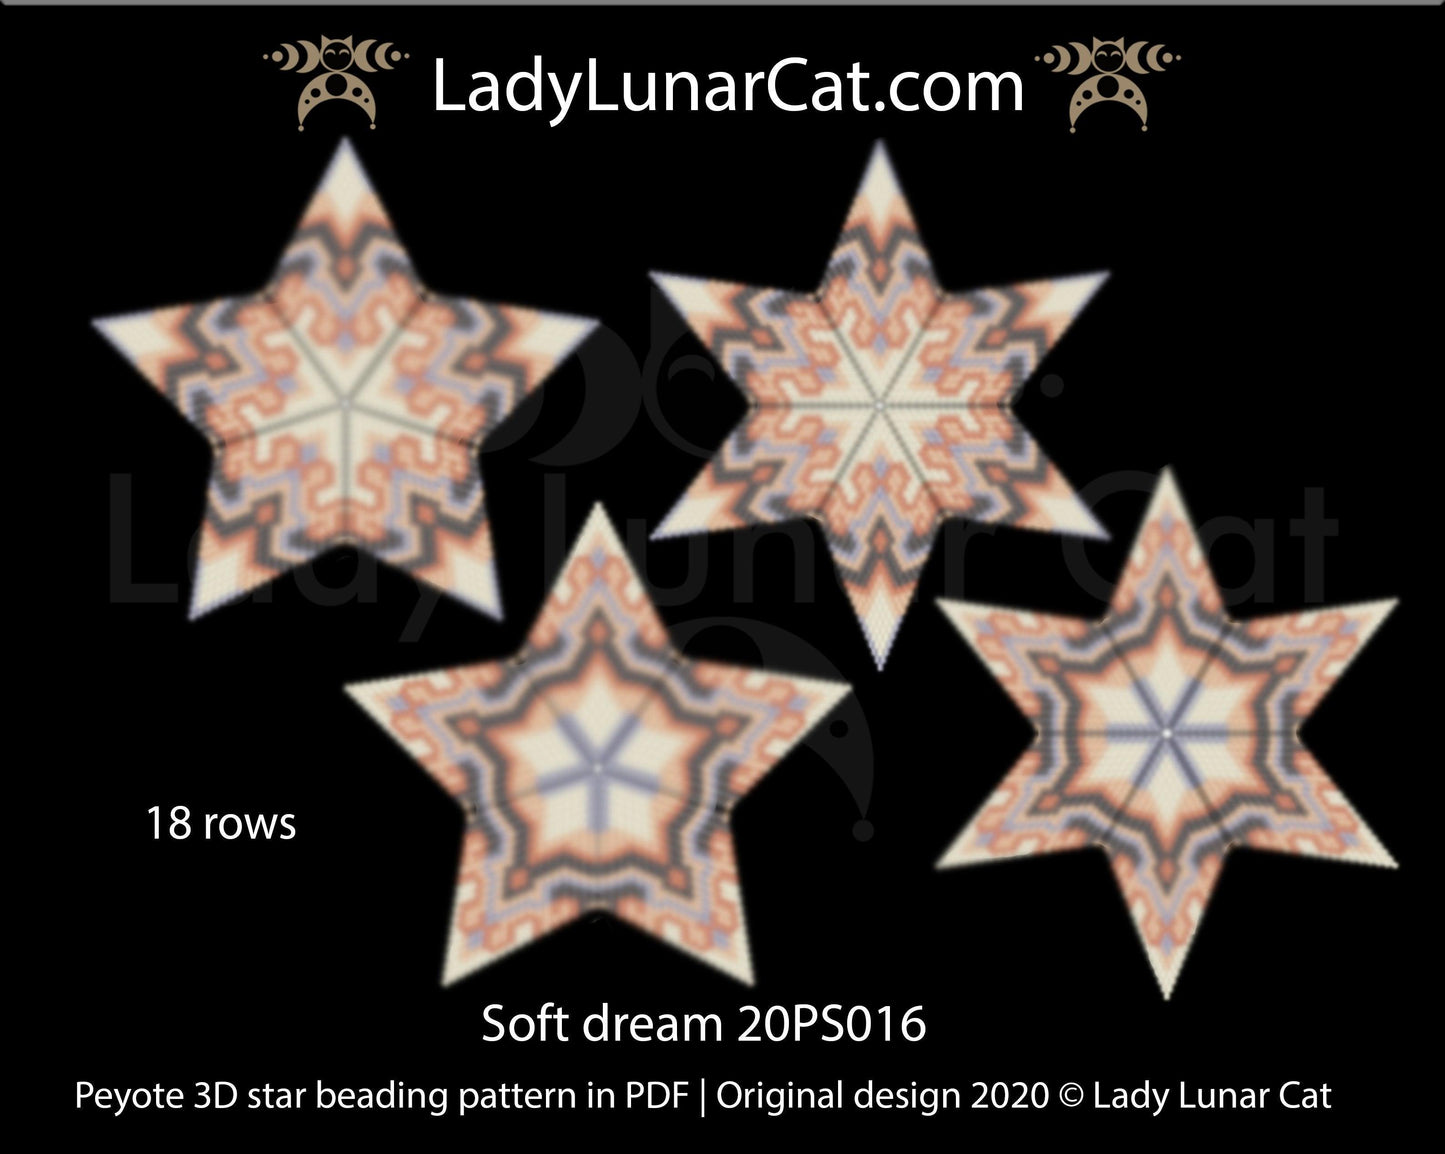 3d peyote star patterns for beading Soft dream star 20PS016 LadyLunarCat